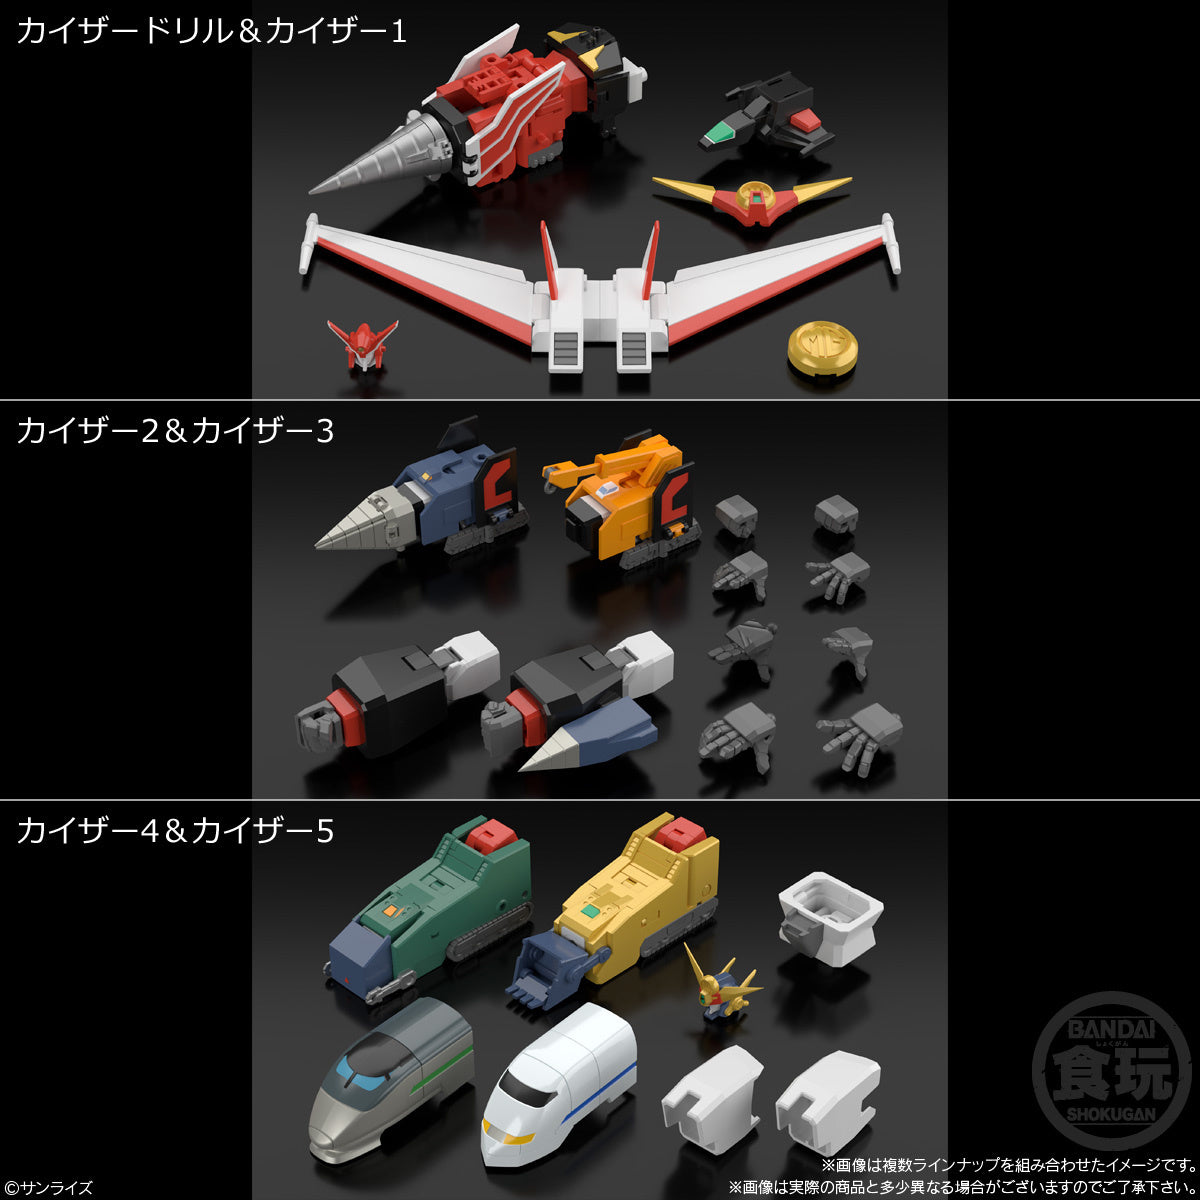 Bandai - Shokugan - SMP [Shokugan Modeling Project] - The Brave Express Might Gaine 2 Model Kit (Box of 3)